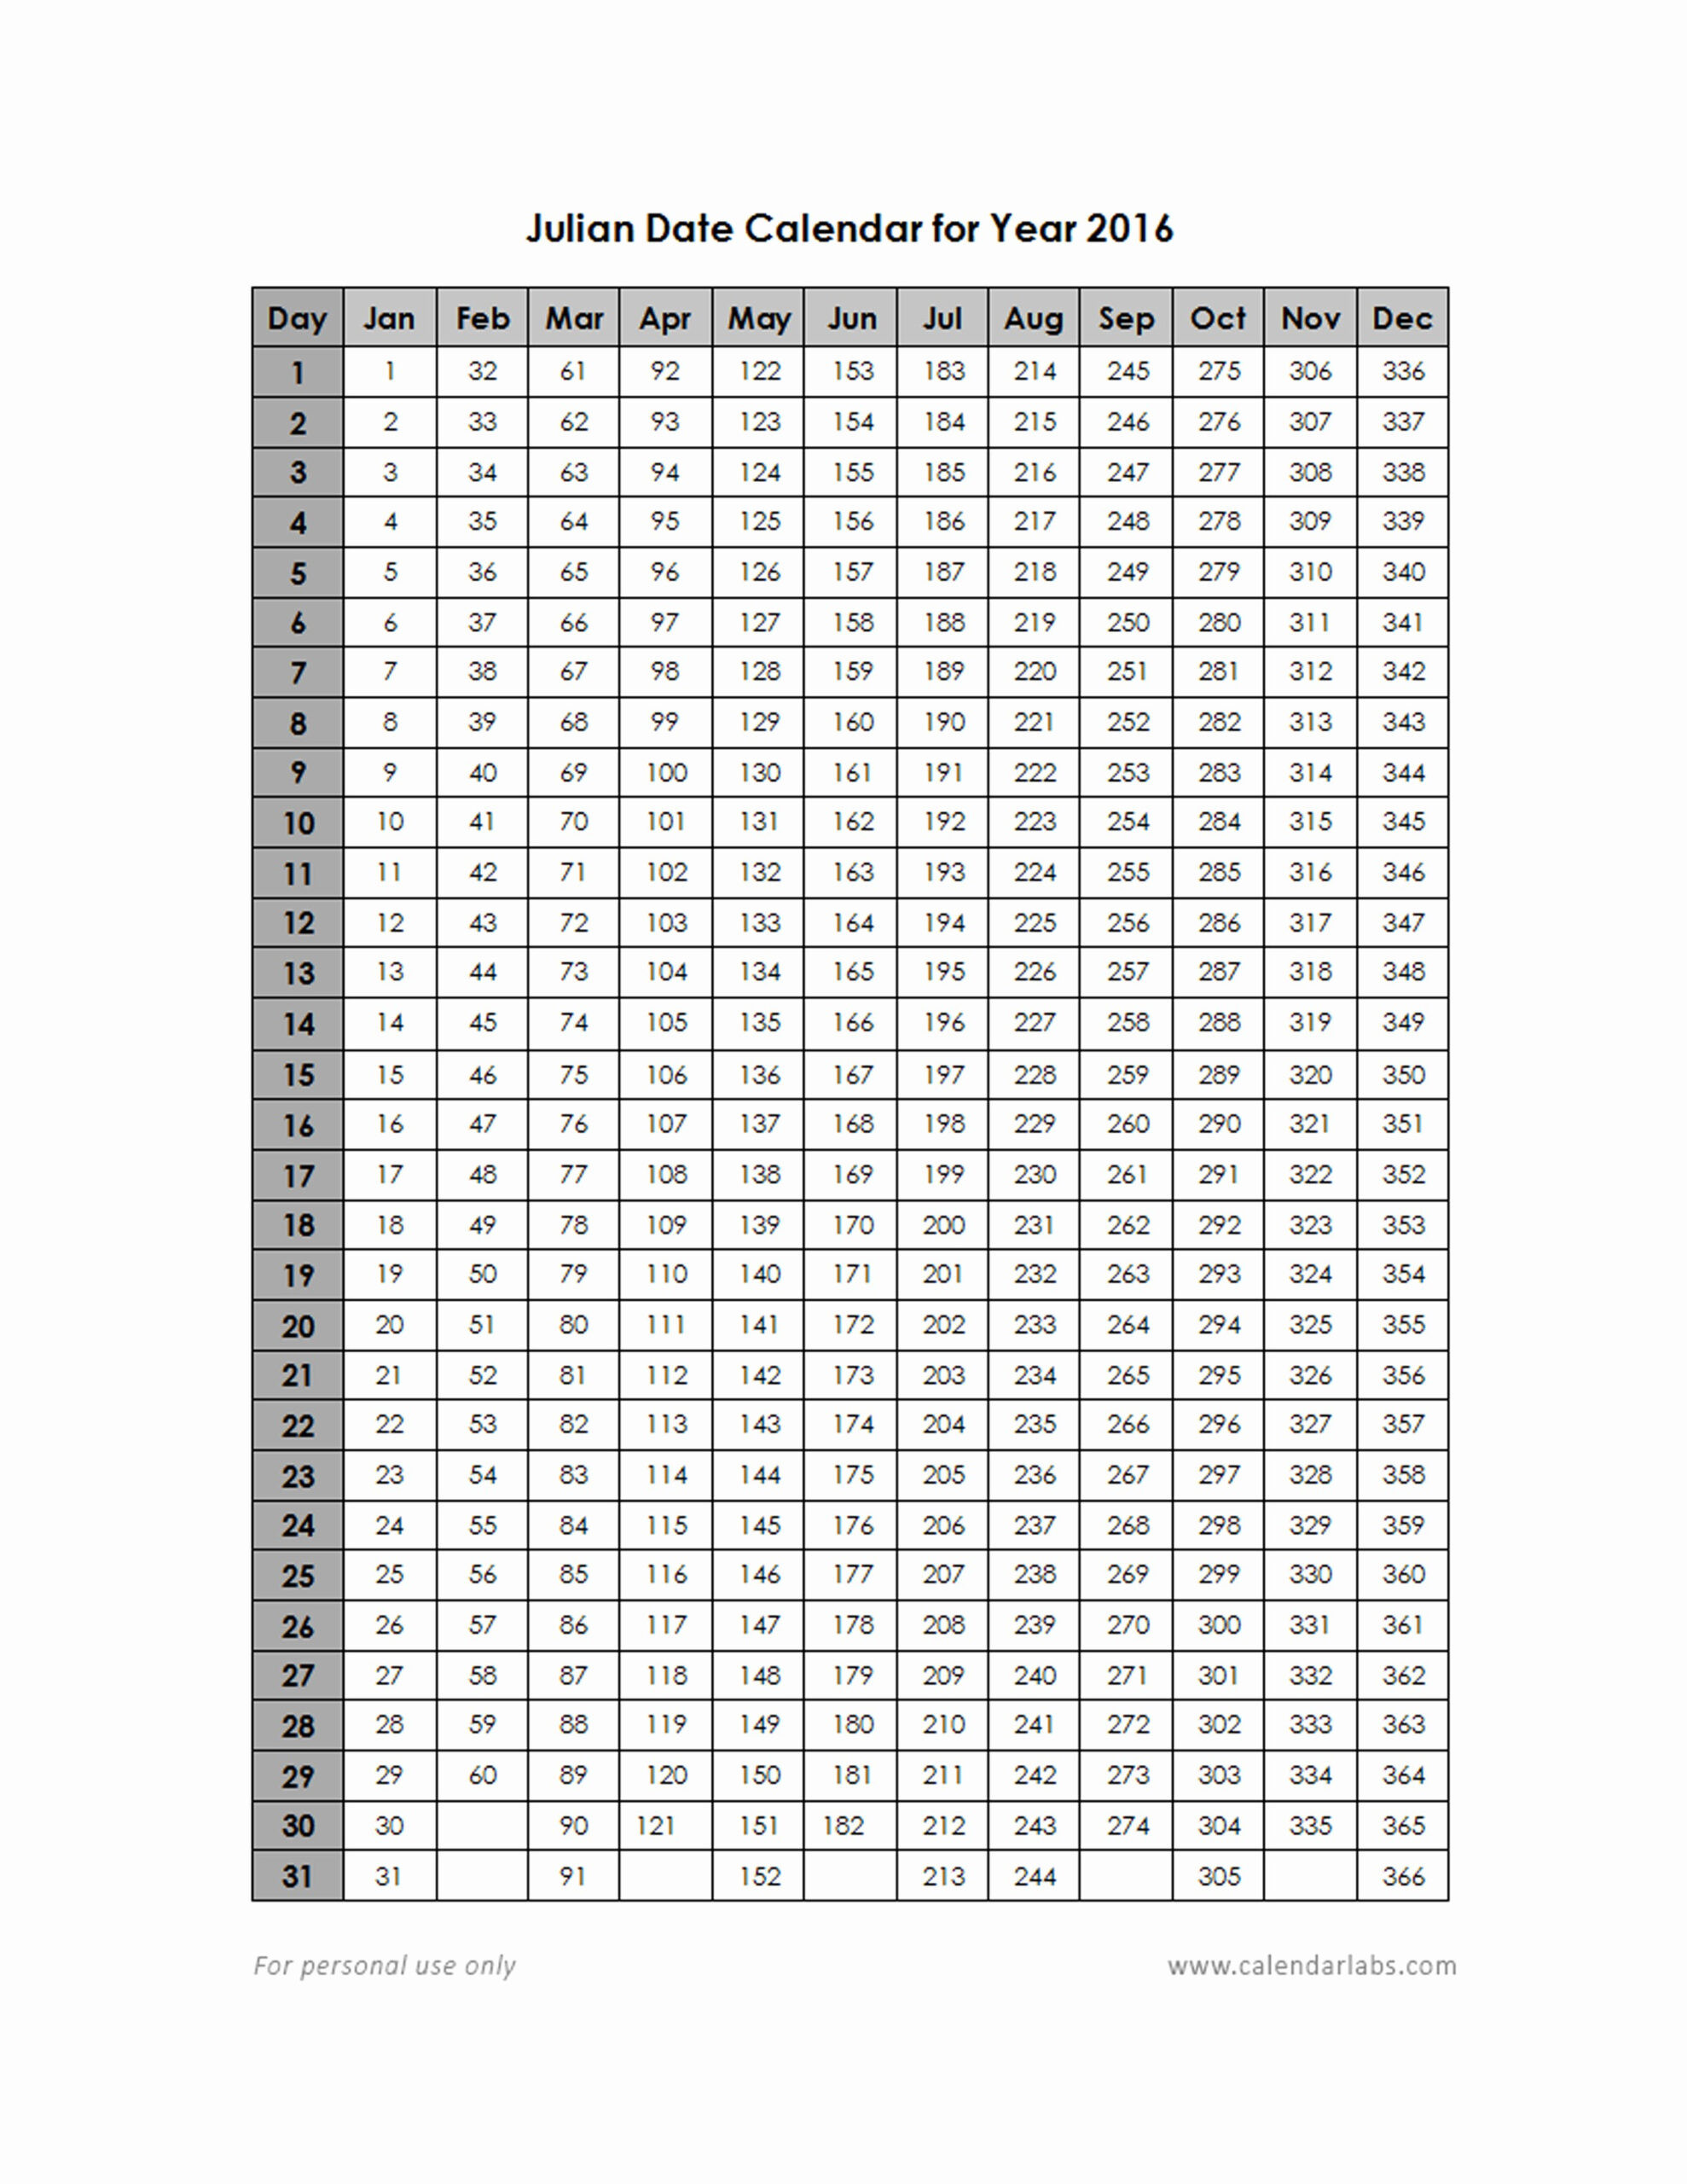 Julian Date Calendar Perpetual | Calendar For Planning